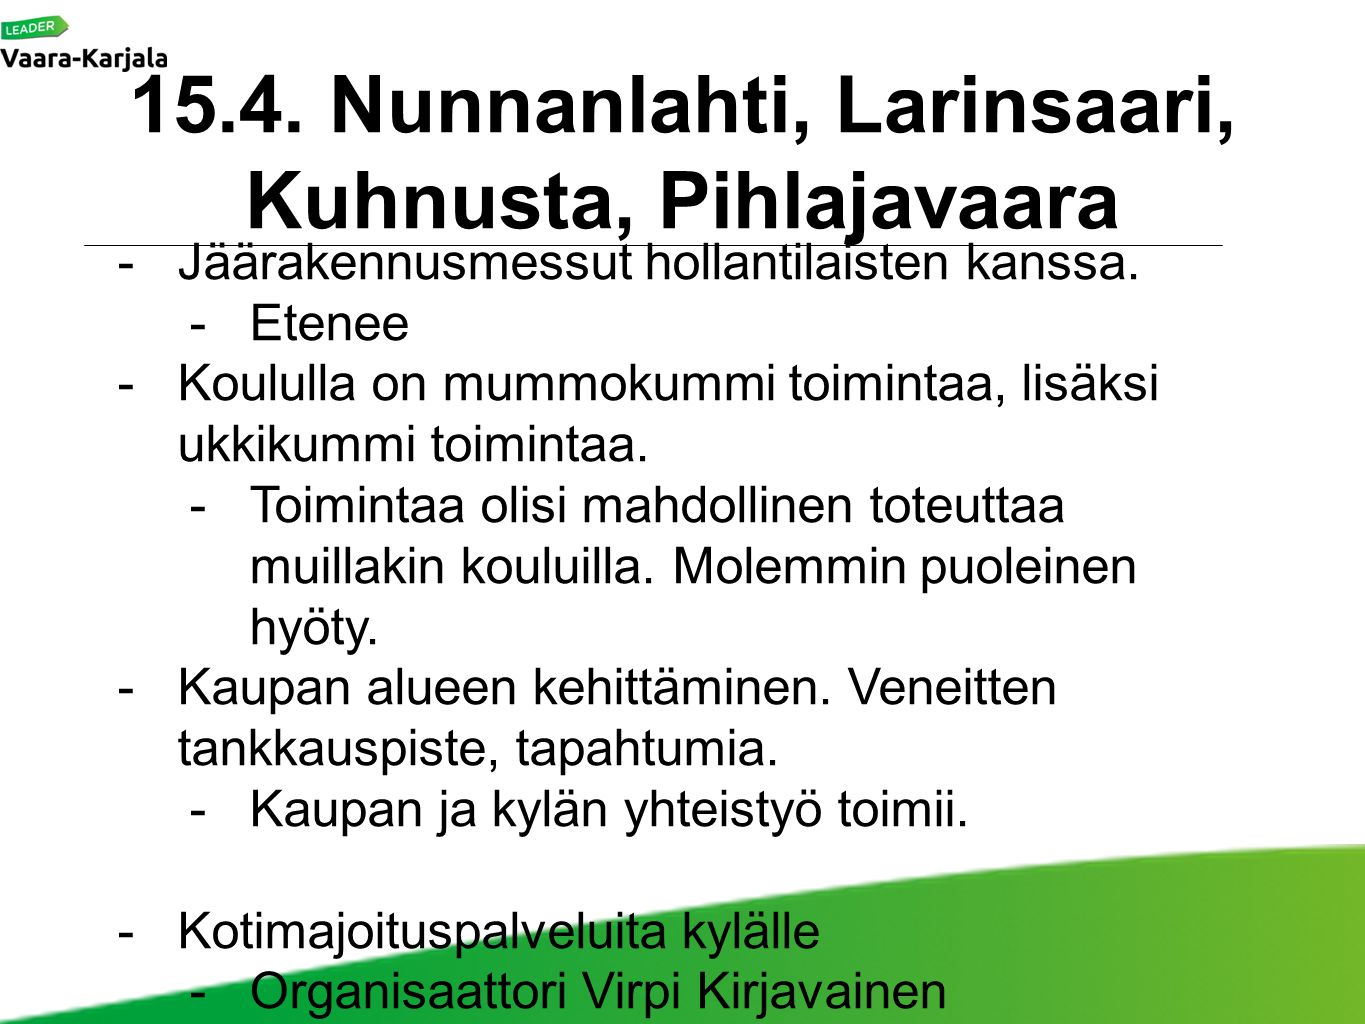 15.4. Nunnanlahti, Larinsaari, Kuhnusta, Pihlajavaara